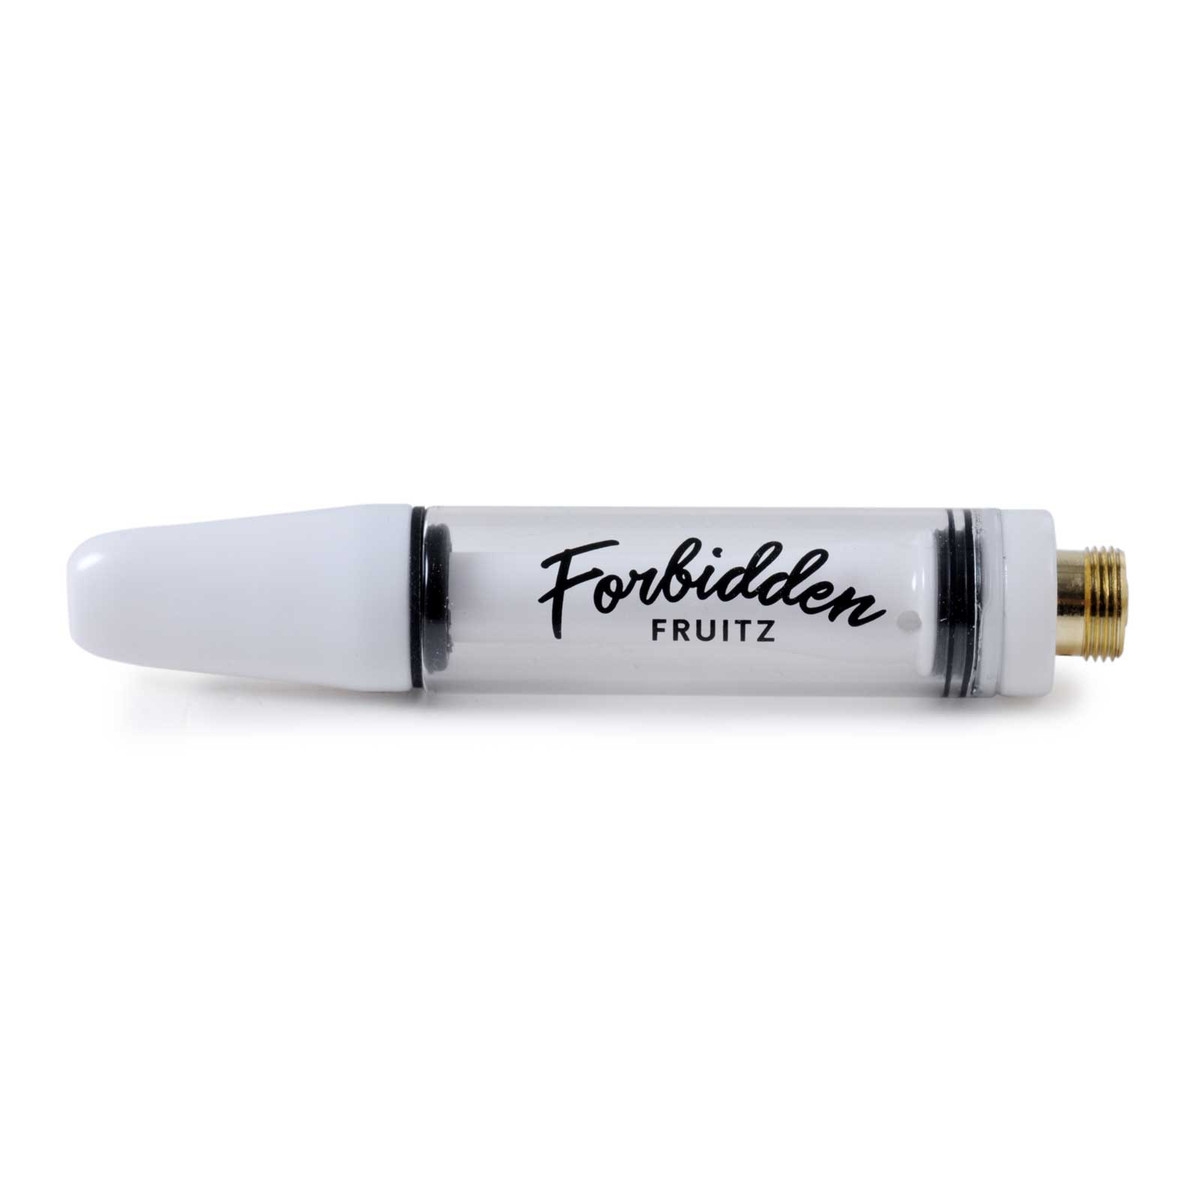 ForbiddenFruitz ForbiddenFruitz 1ml Refillable Premium Ceramic Tip Ceramic Cartridge 510